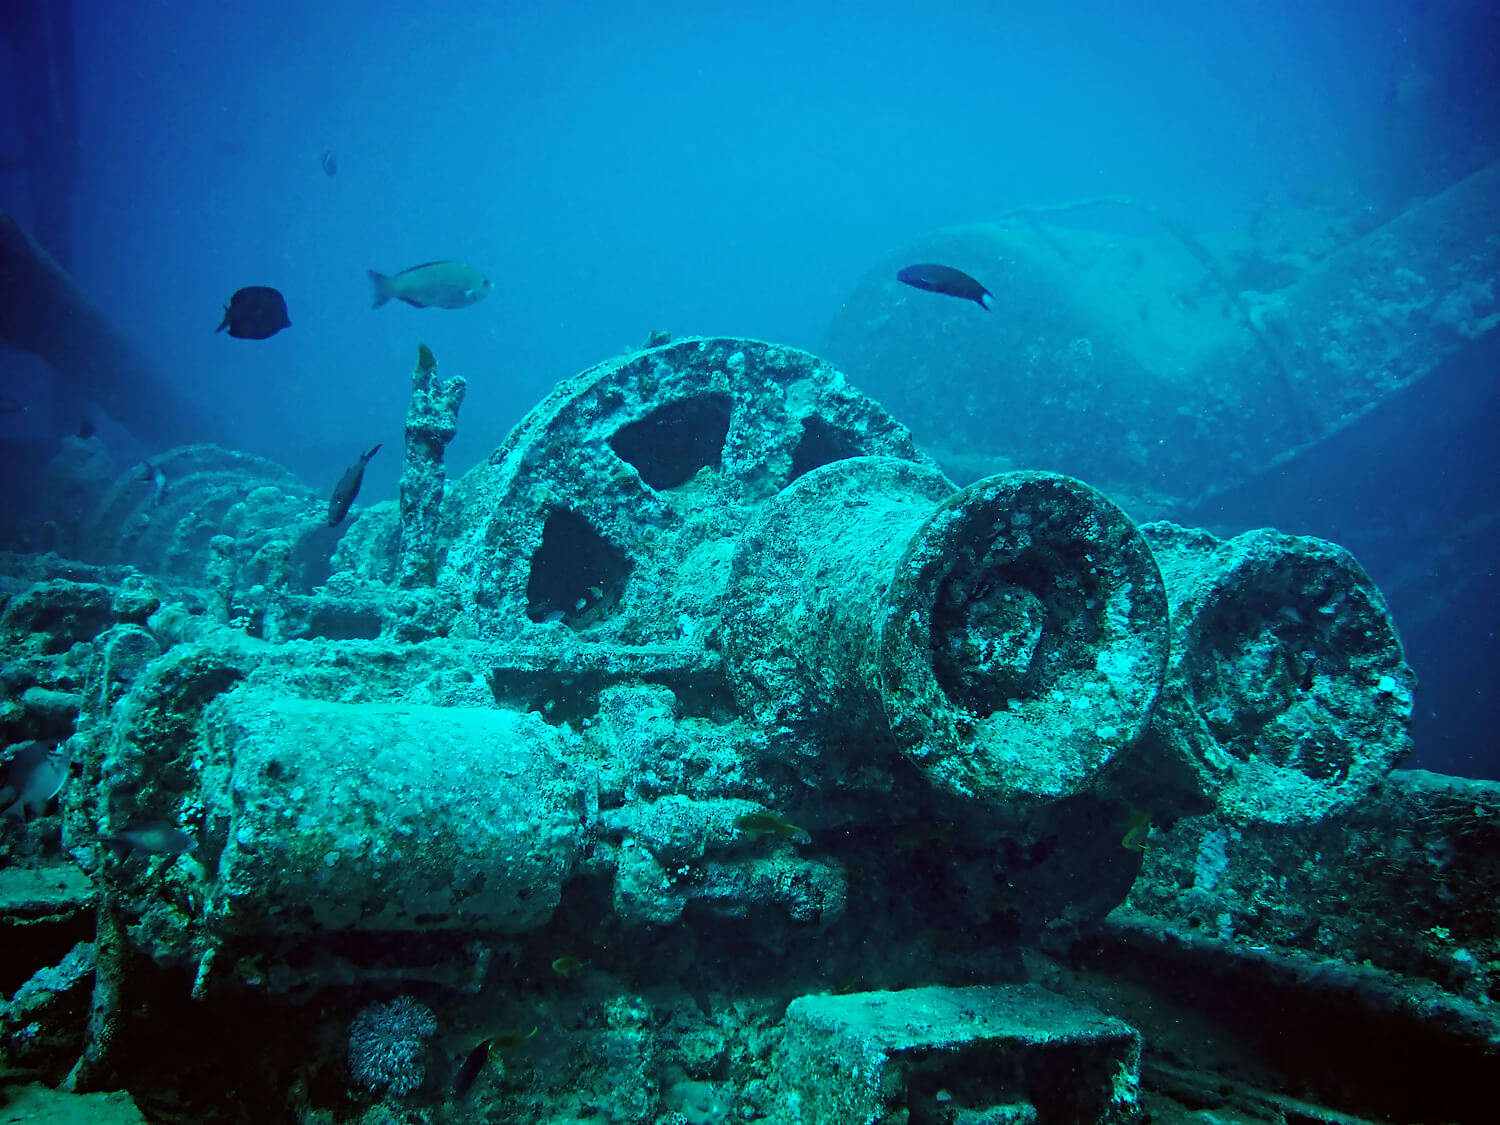 The Wreck of Toulonnais